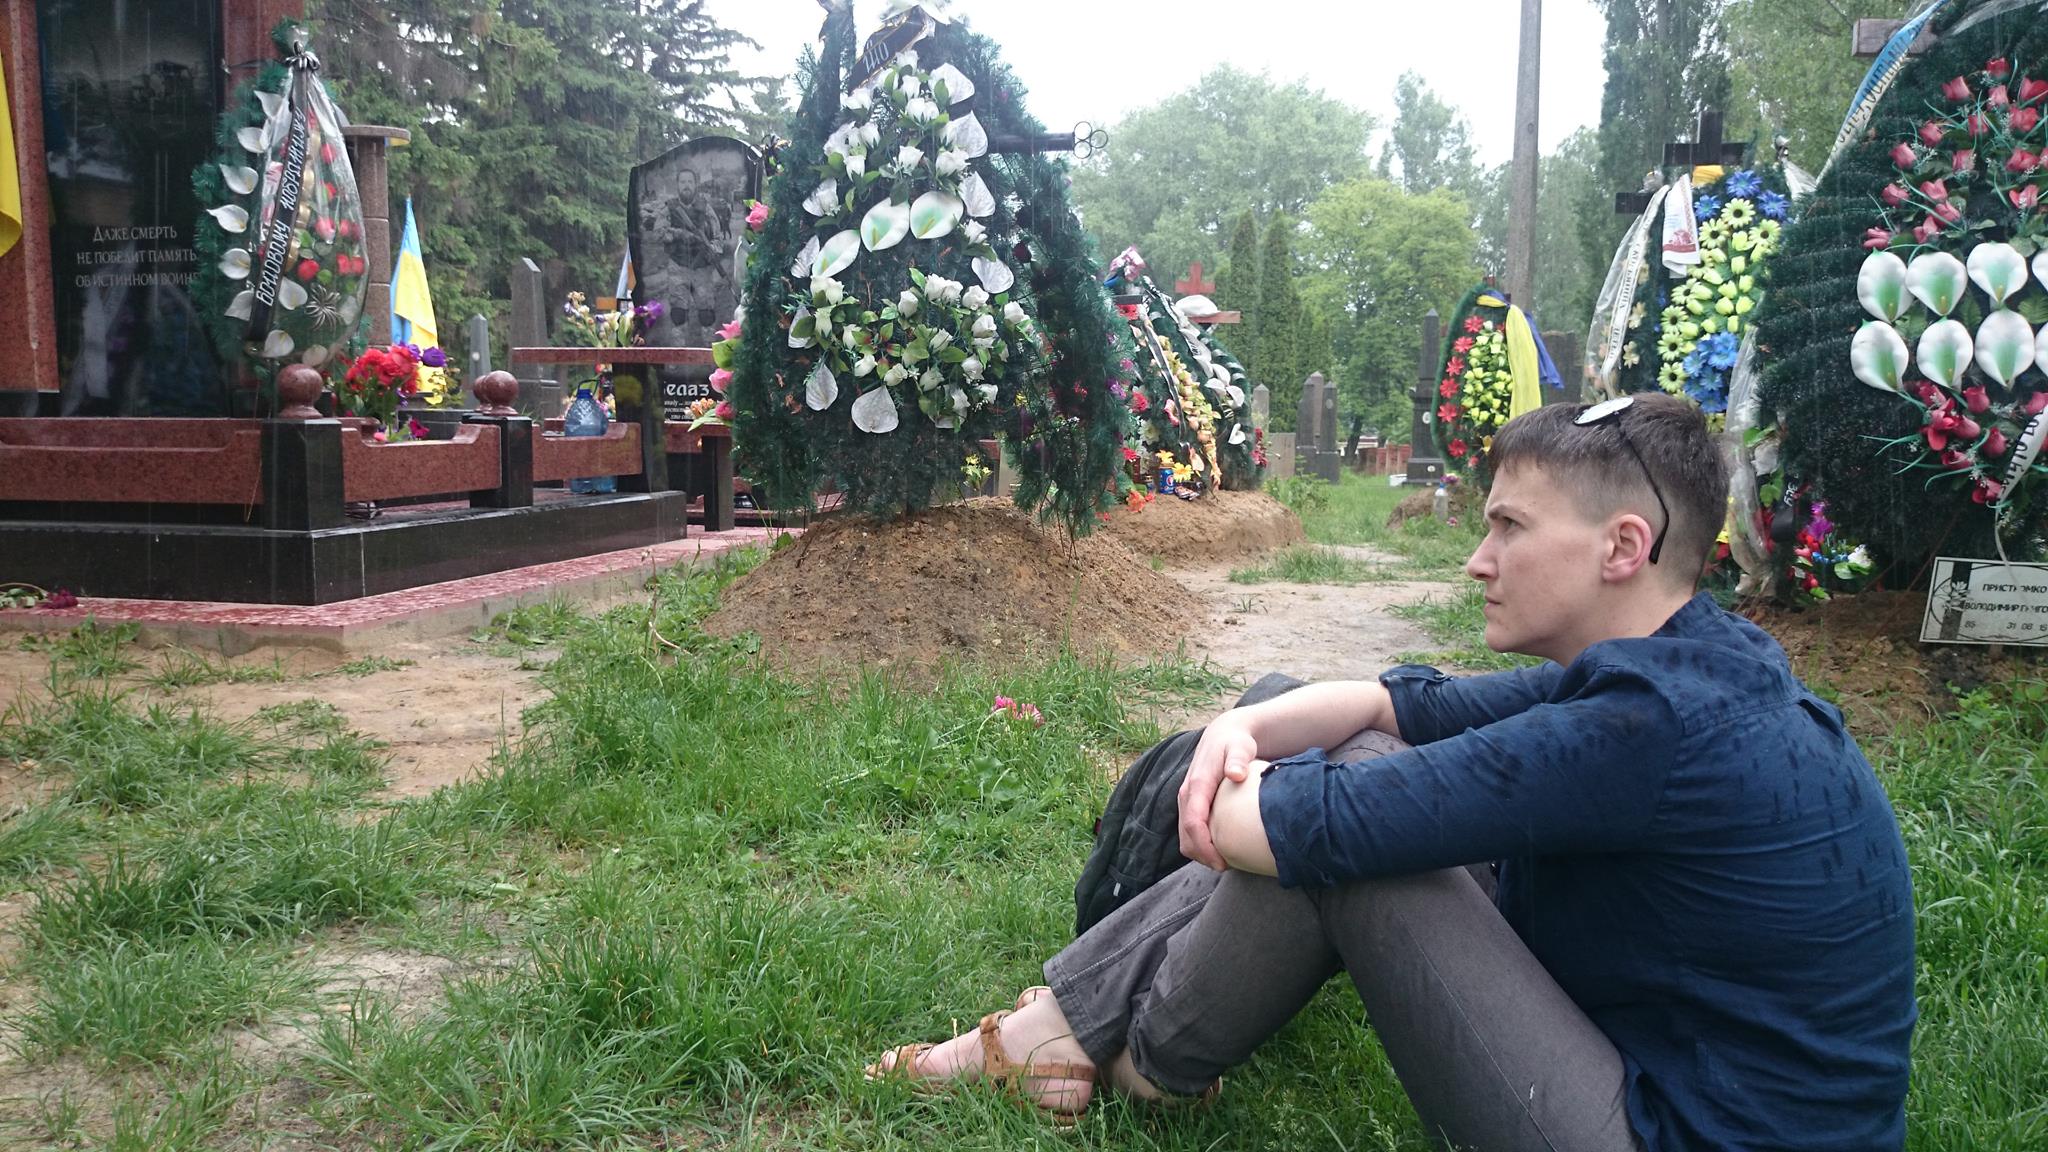 On her 3rd day of freedom, Nadiya Savchenko visiting her fallen friends at a Kyiv cemetery, May 28, 2016 (Image: Vira Savchenko's FB post)